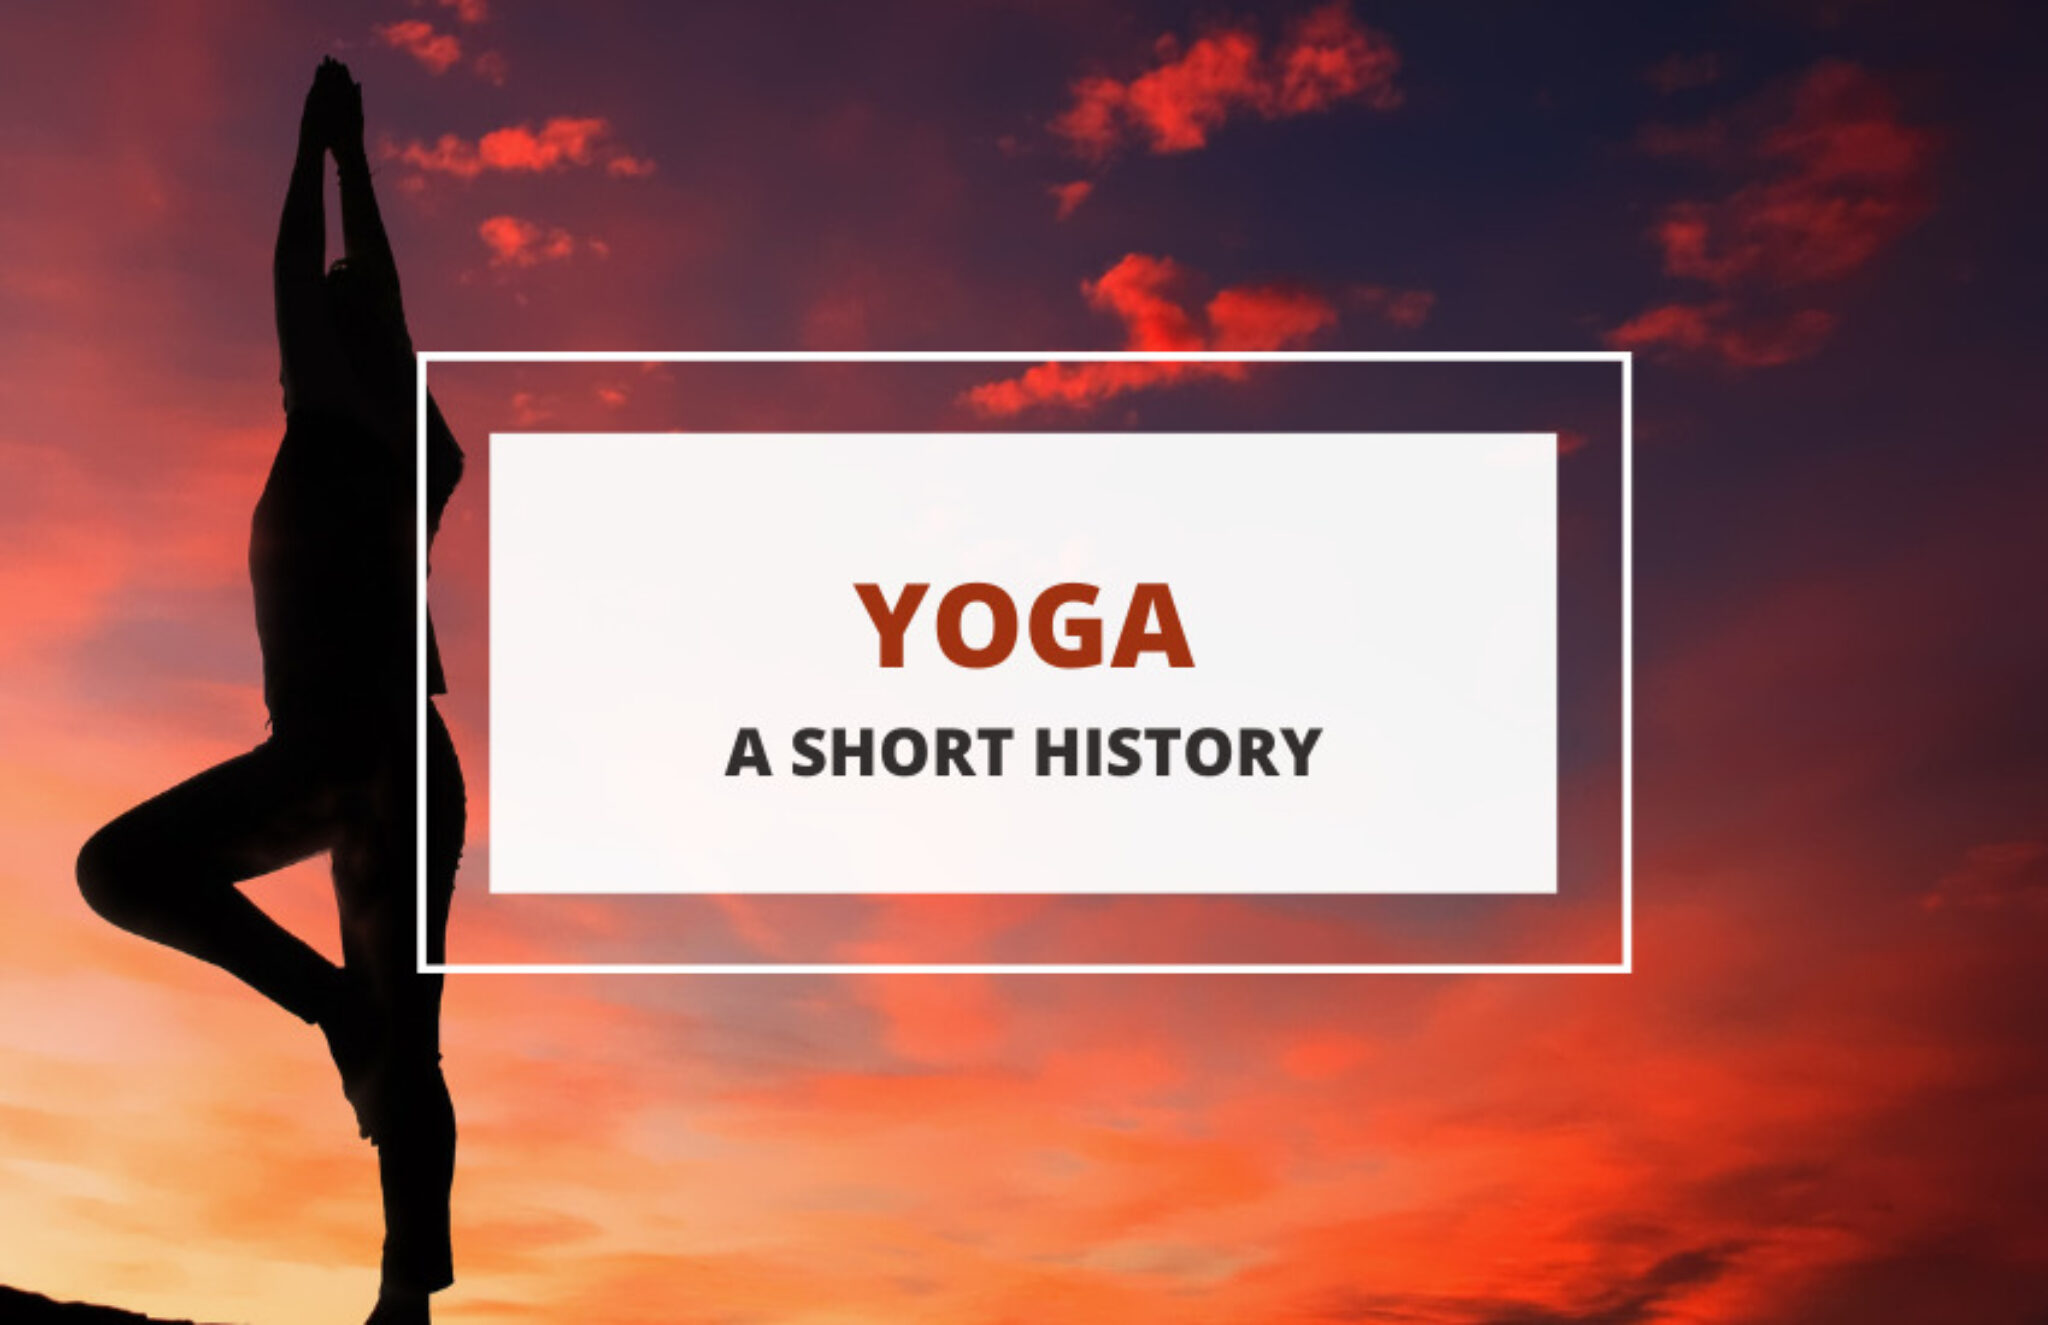 yoga history essay topics